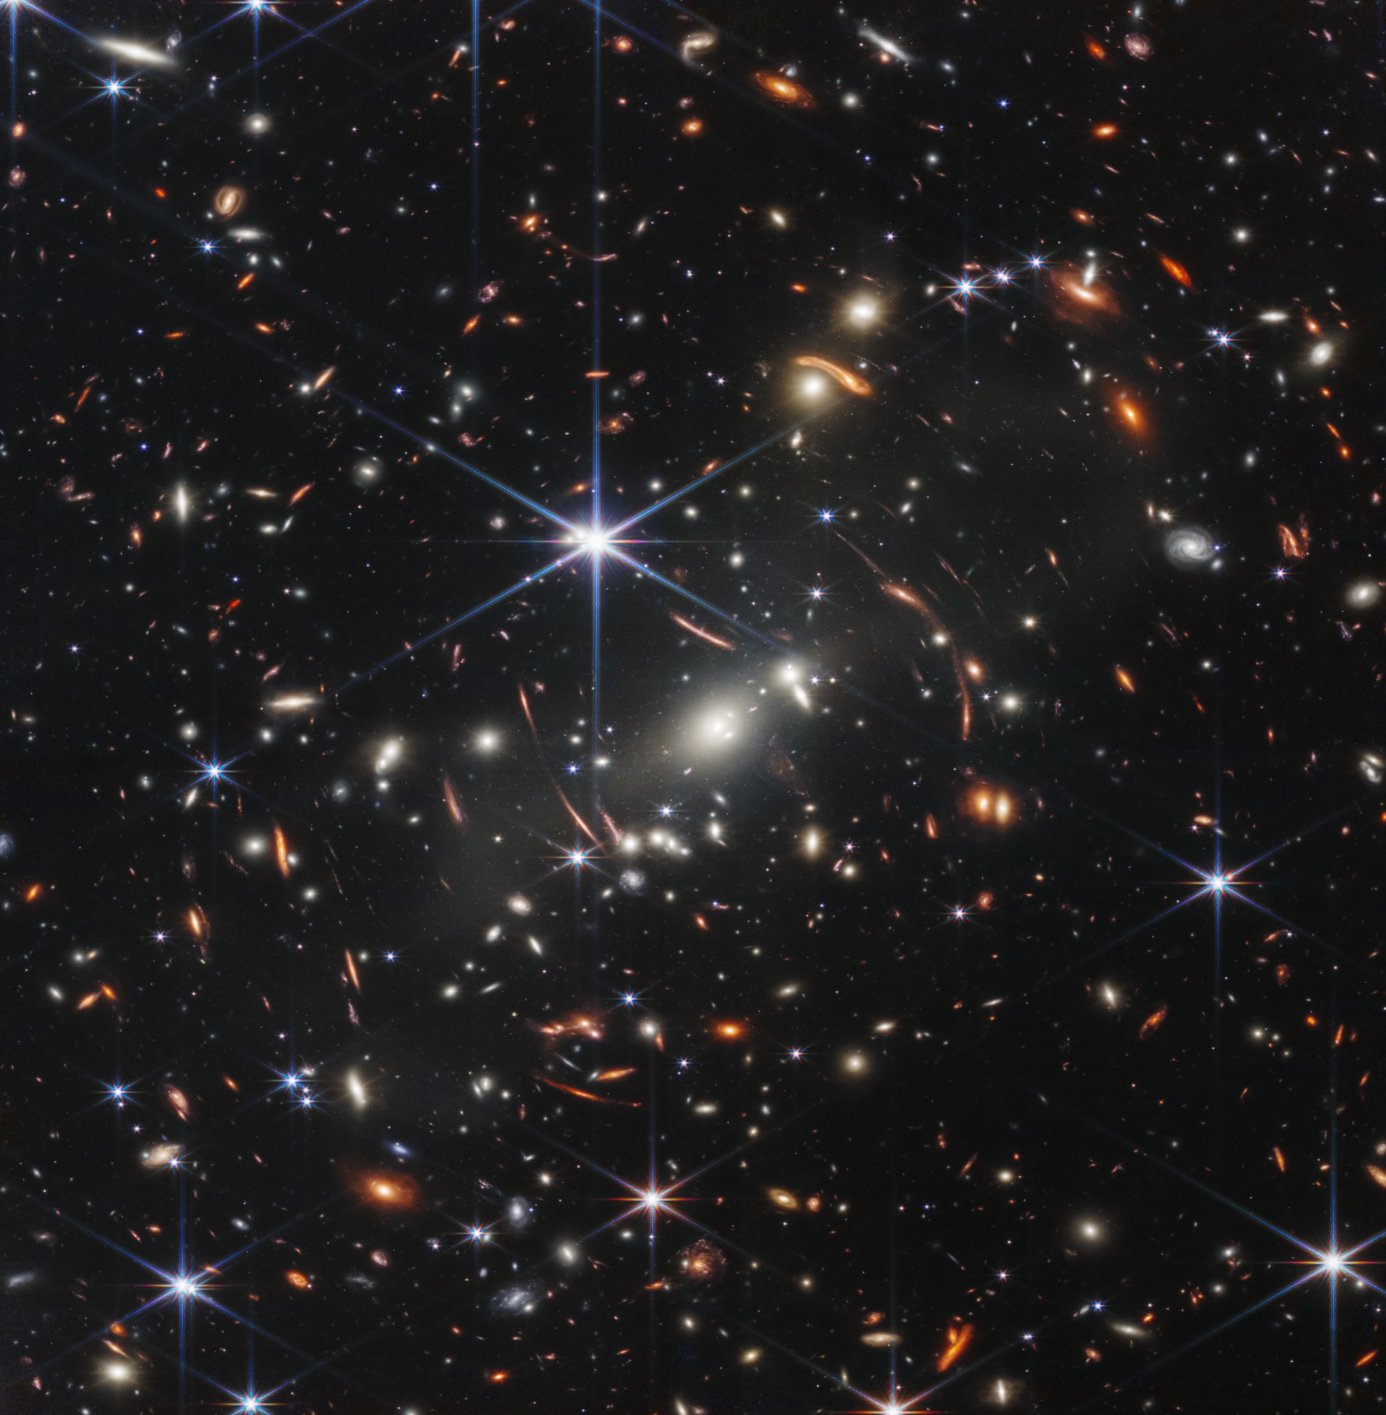 nasa james webb space telescope takes pic of earliest galaxies